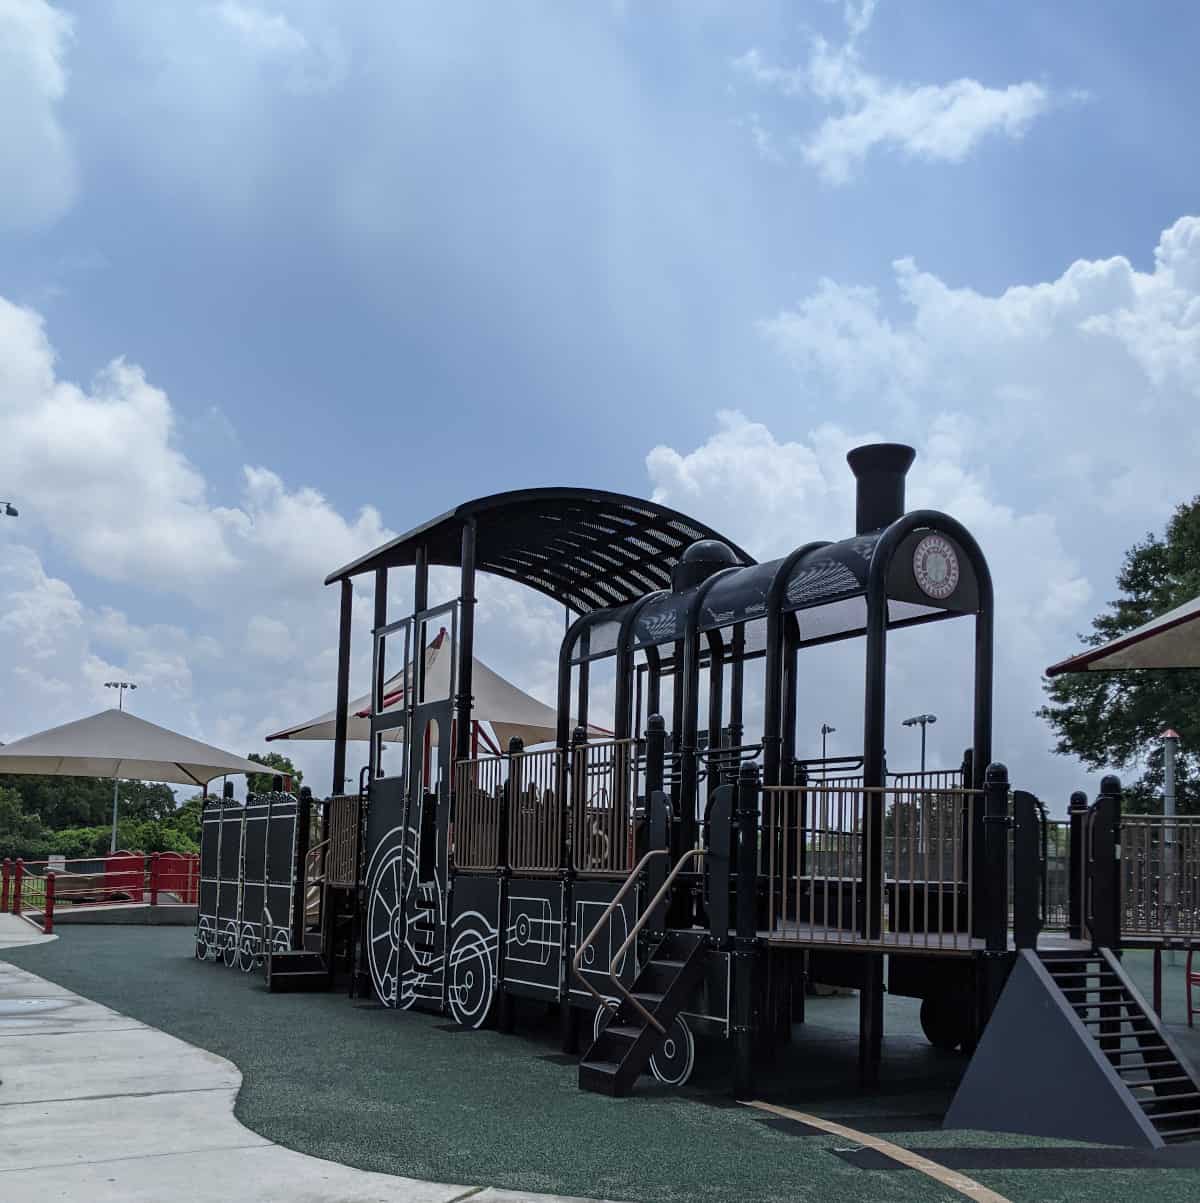 Katy Play Station Train Playground